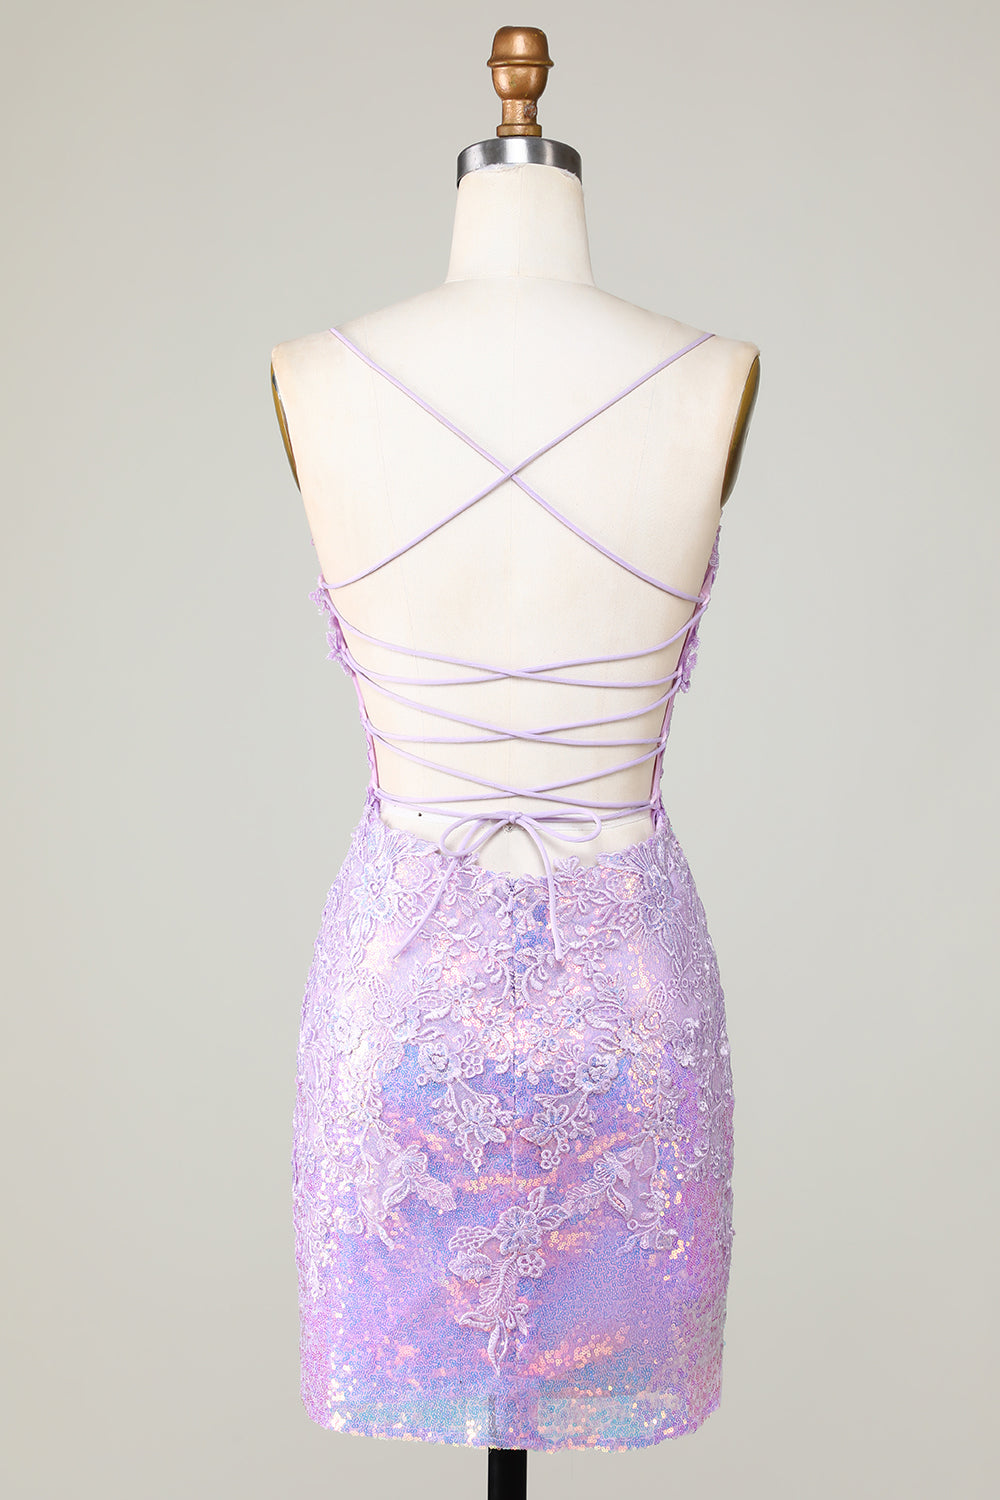 Glitter Tight Spaghetti Straps Purple Corset Homecoming Dress with Criss Cross Back